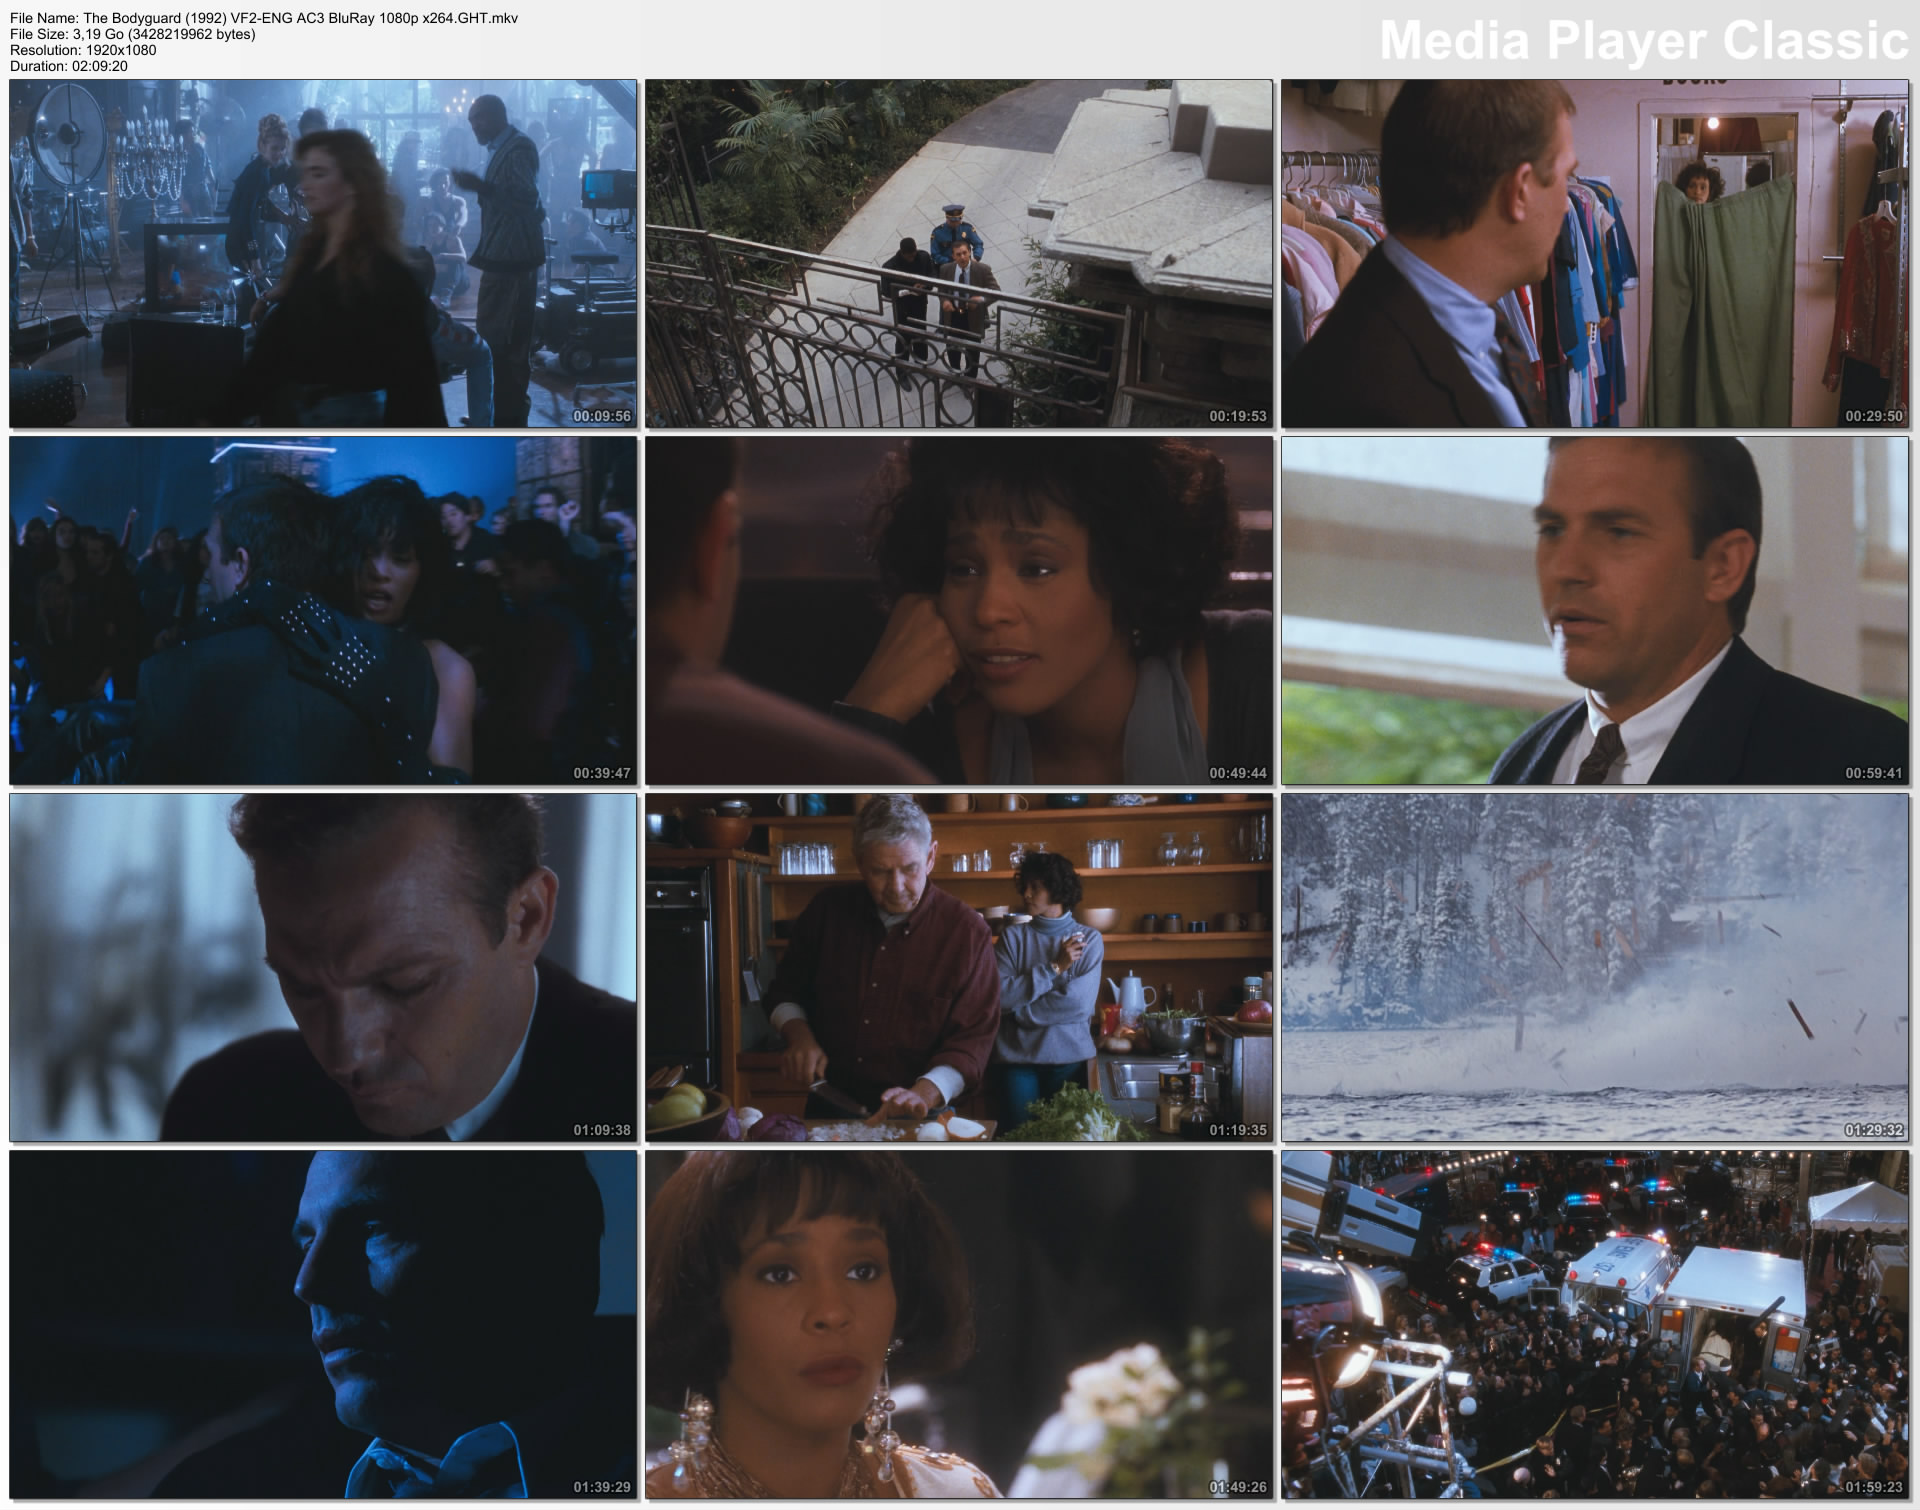 The Bodyguard (1992) VF2-ENG AC3 BluRay 1080p x264.GHT